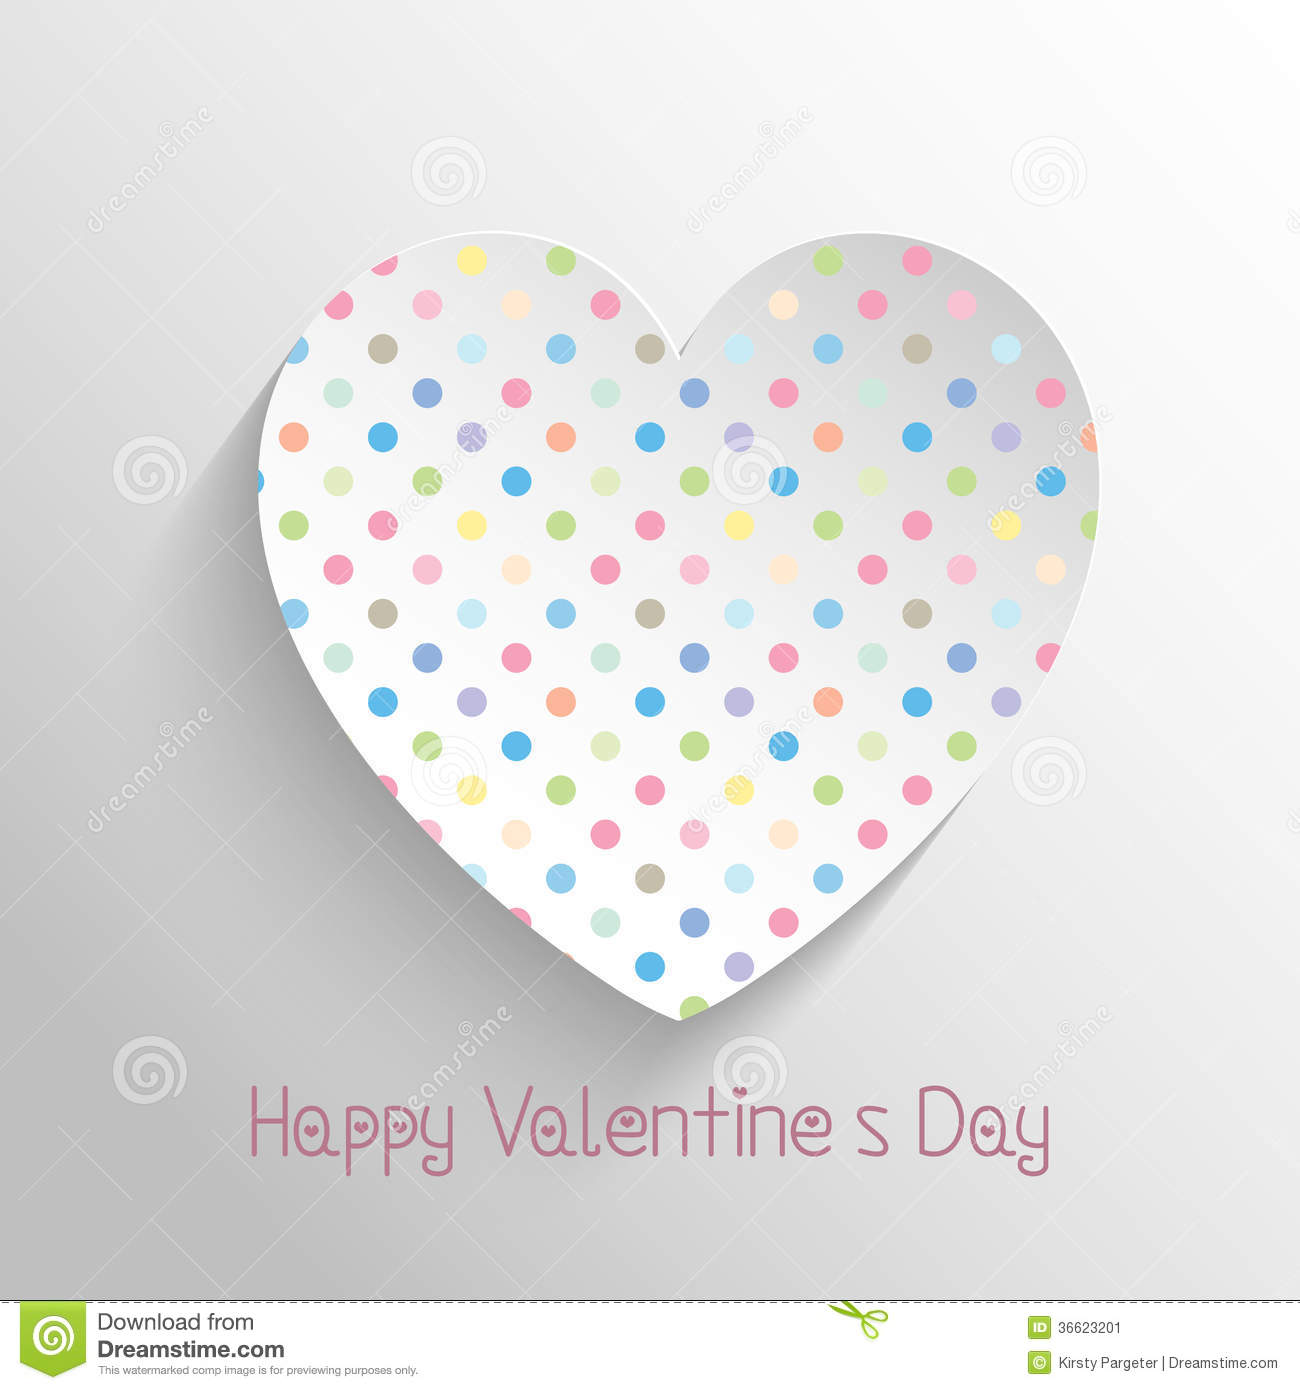 Polka Dot Heart Stock Image   Image  36623201